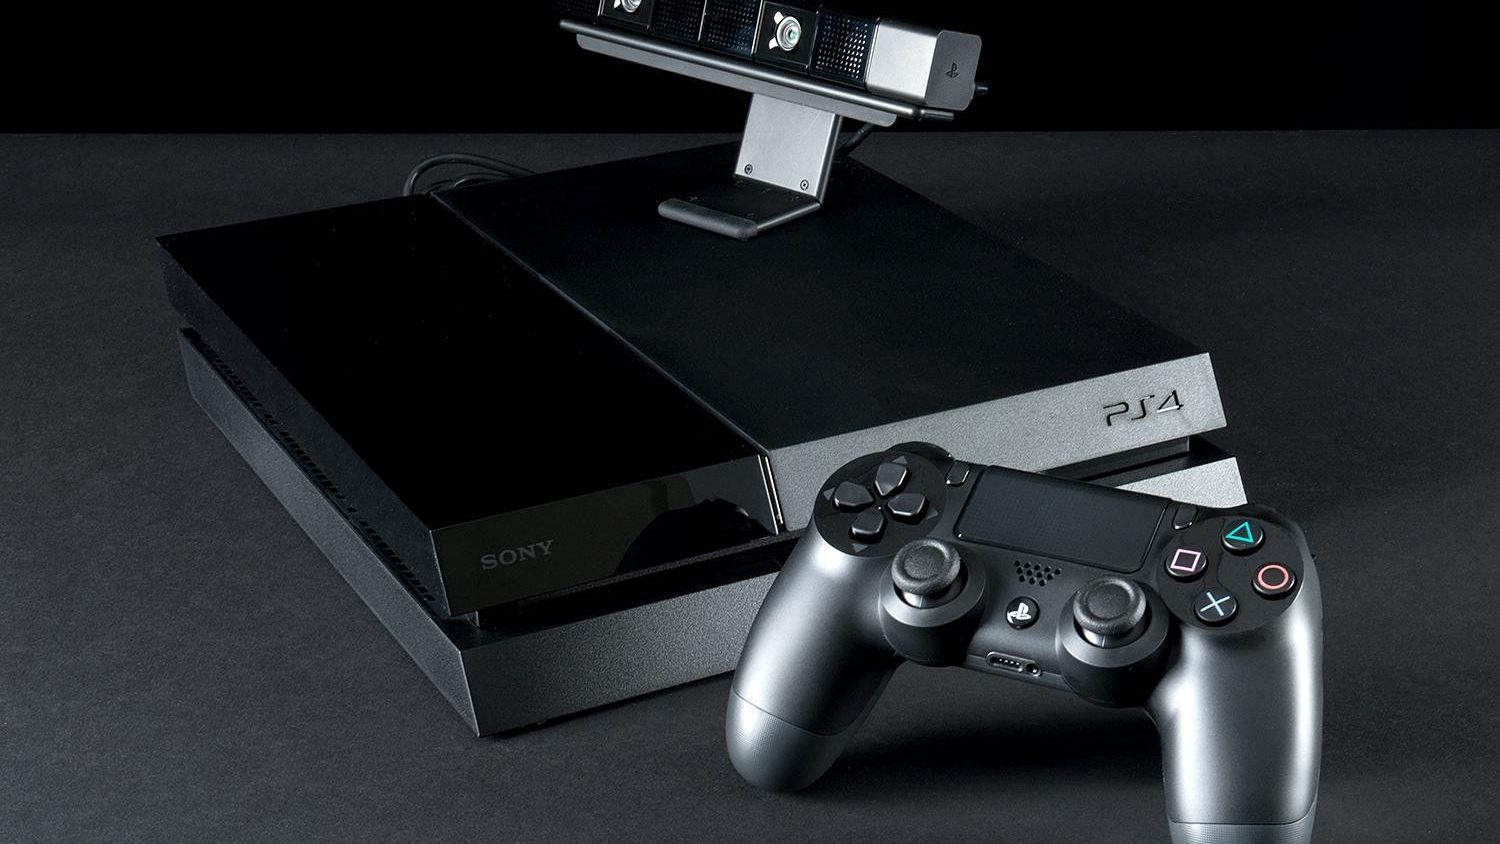 Sony inicia pré-venda de The Last of Us Part II com valores promocionais -  Canaltech